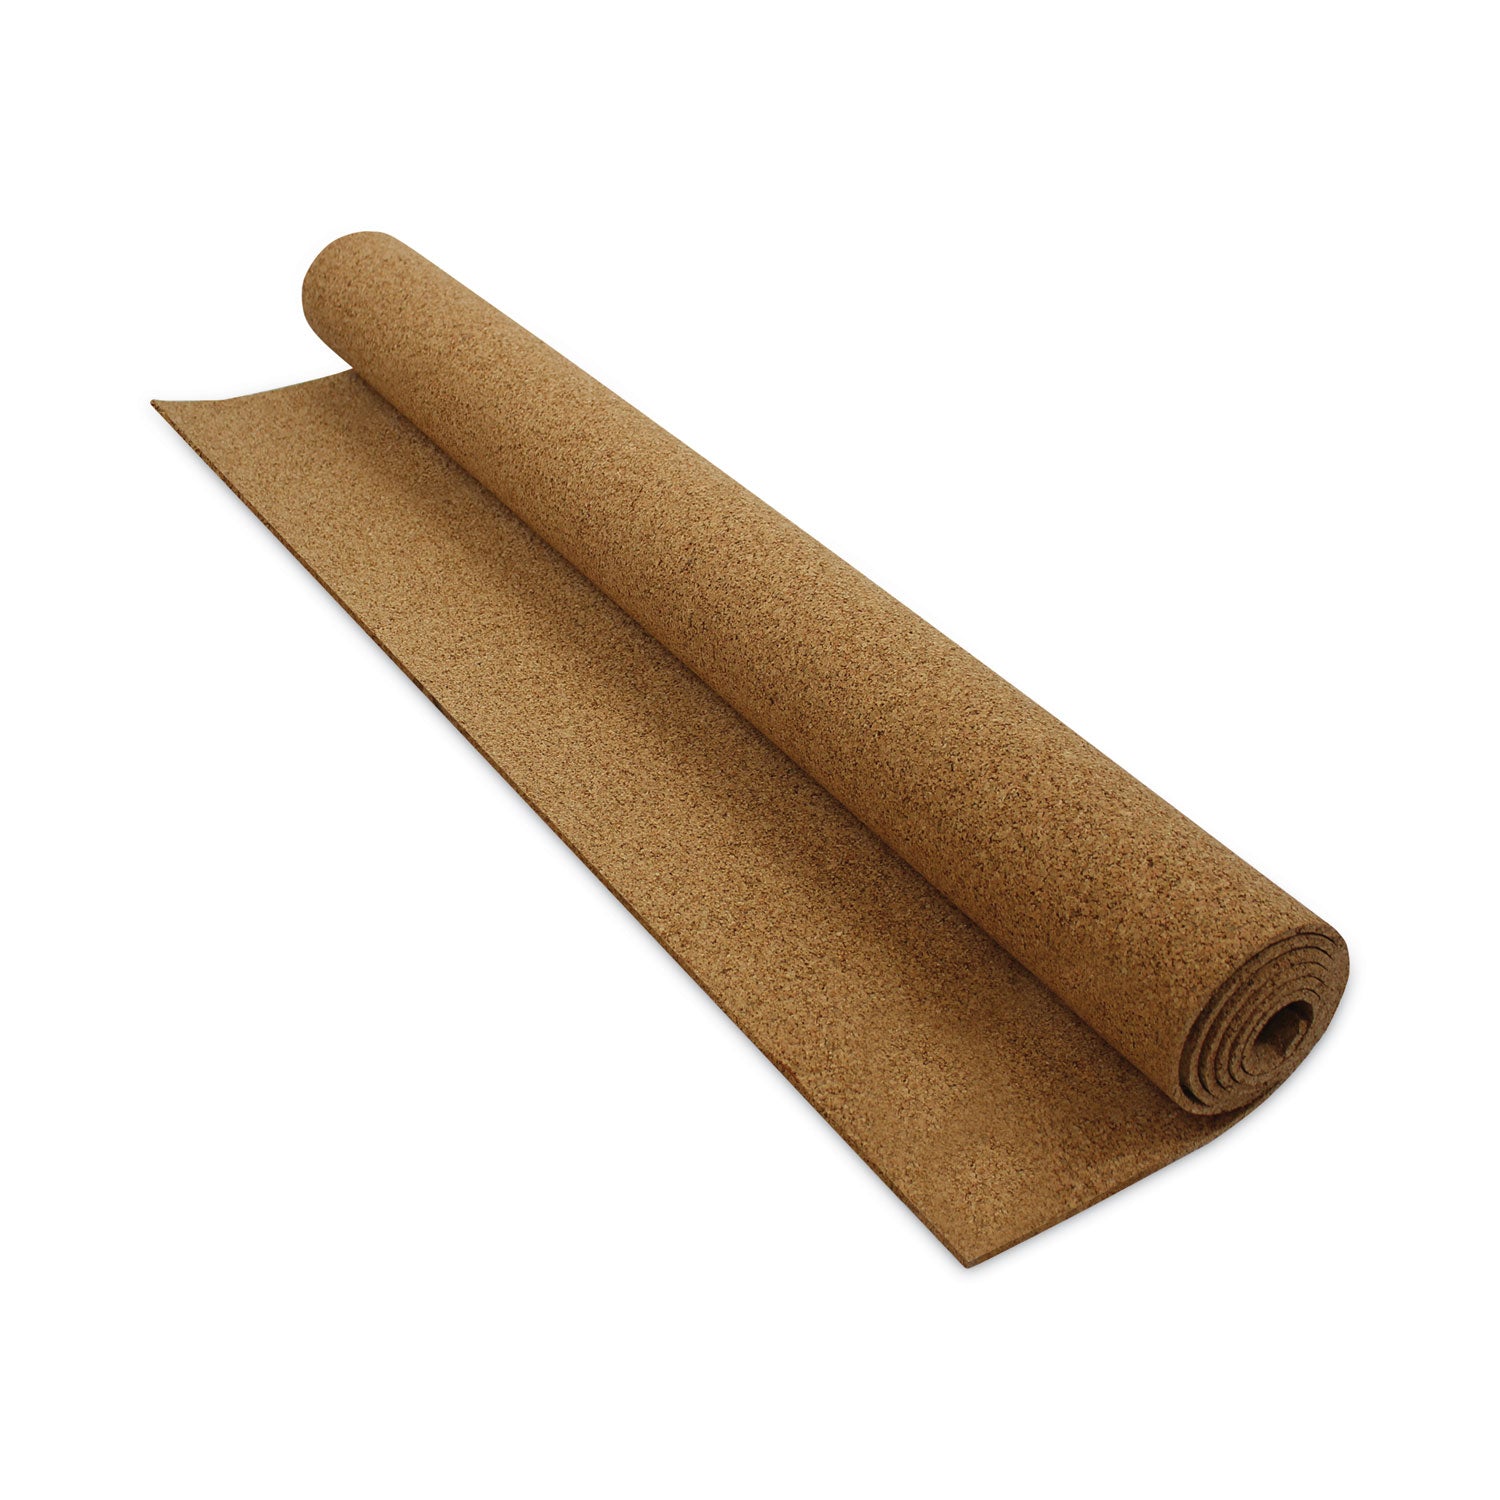 cork-roll-96-x-48-012-thick-brown-surface_flp38001 - 1